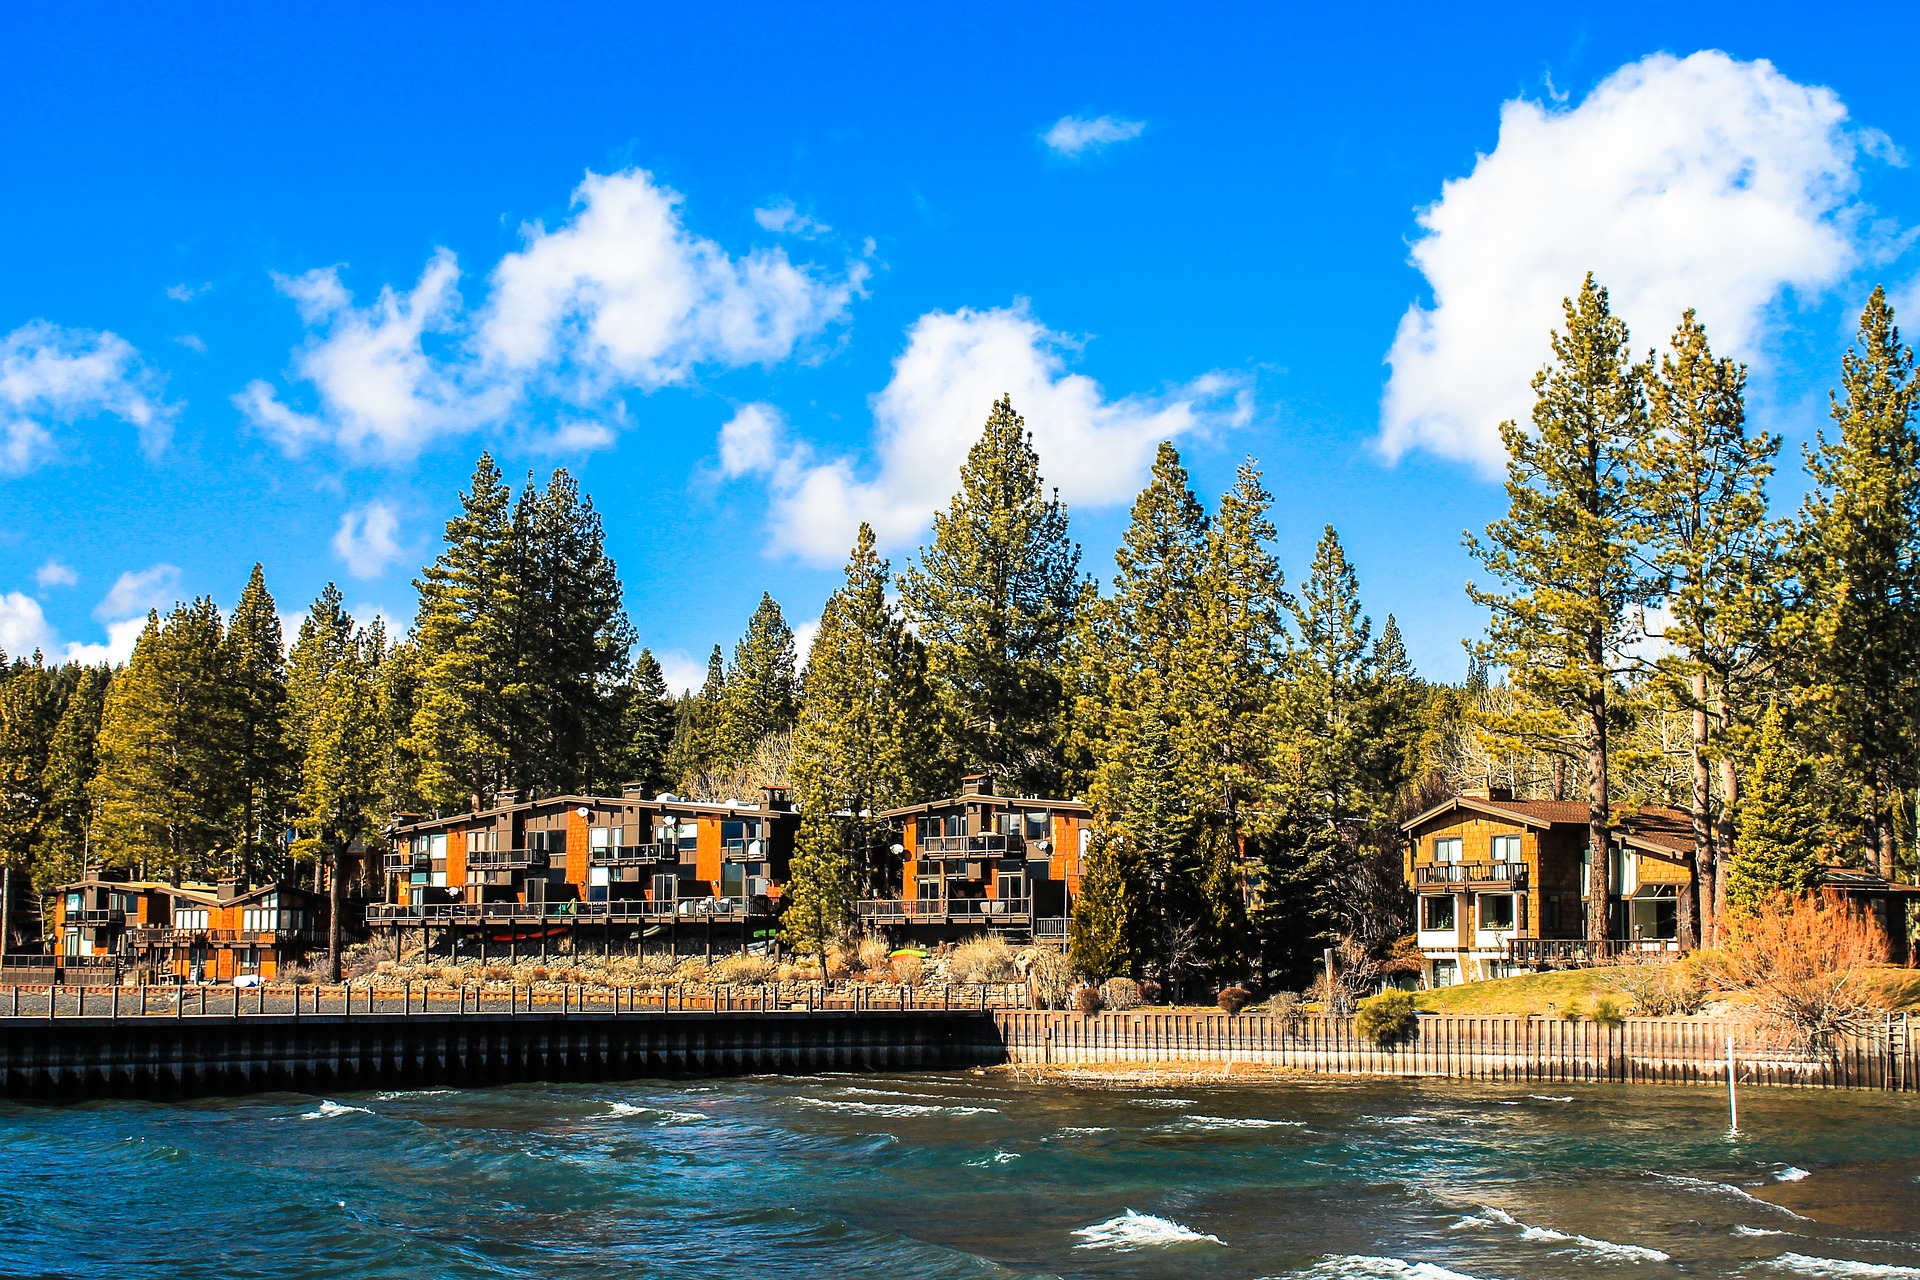 Lake Tahoe, California/Nevada